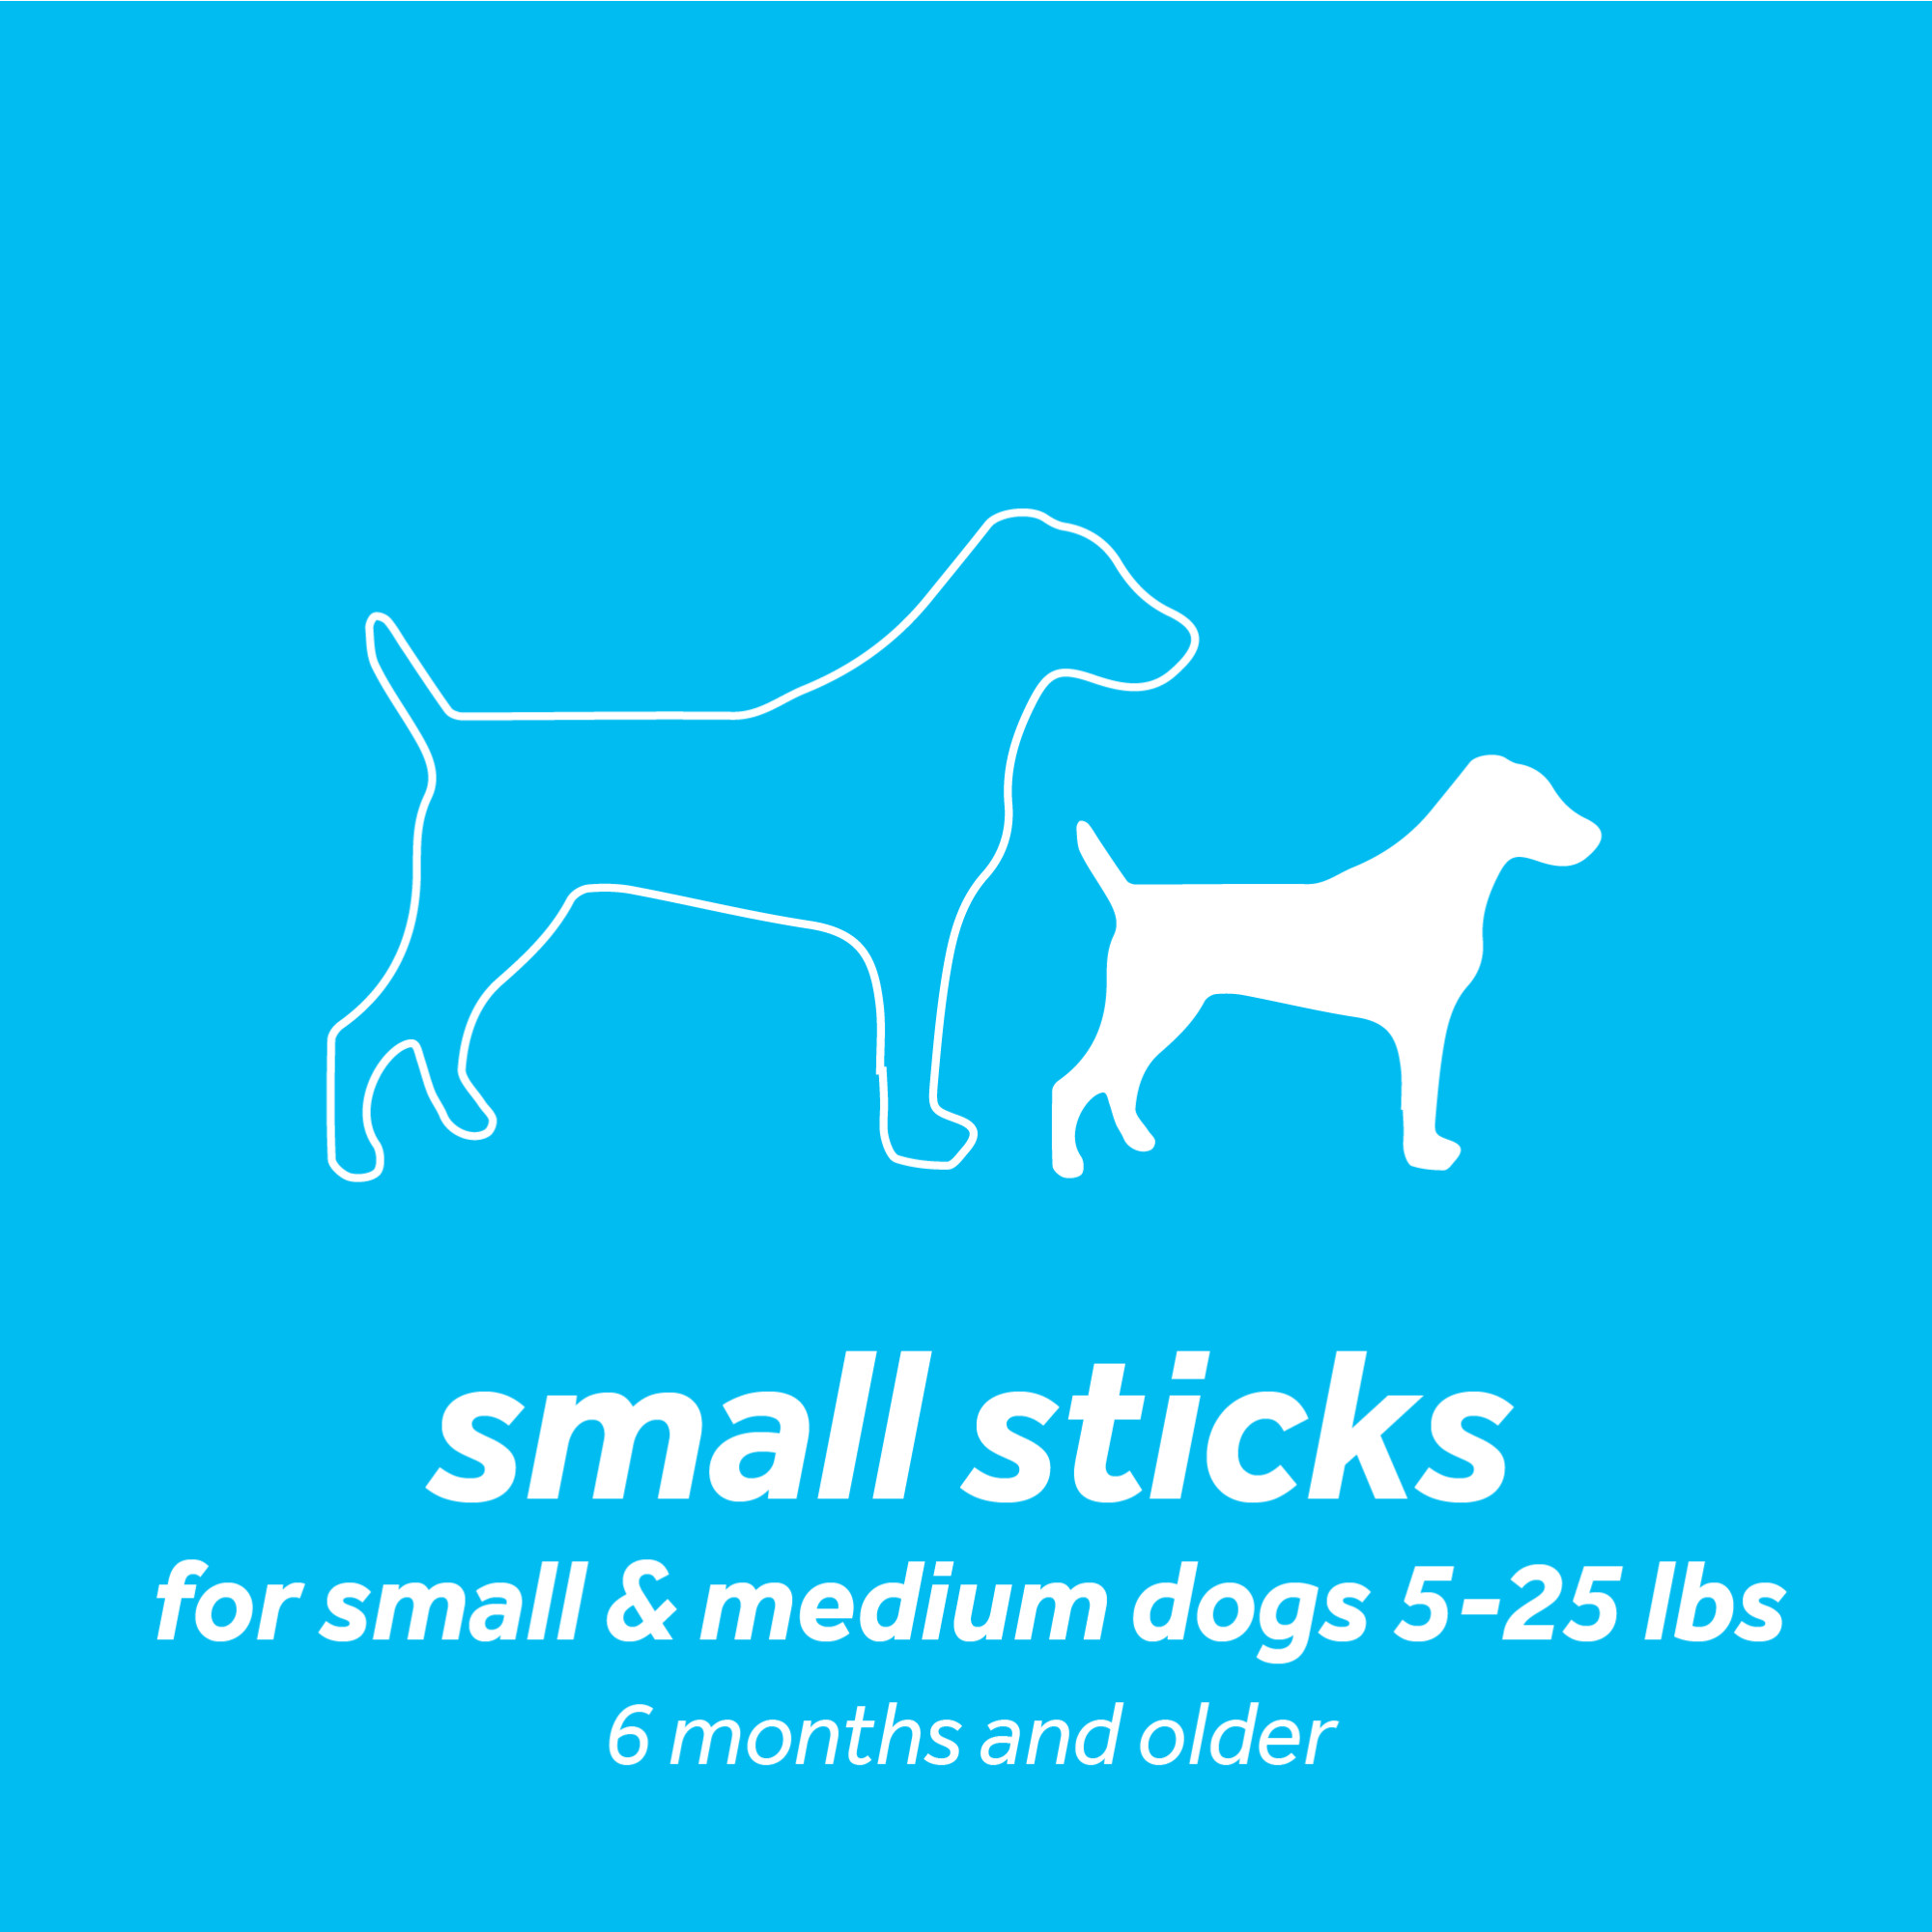 Dental Sticks for Small Dogs